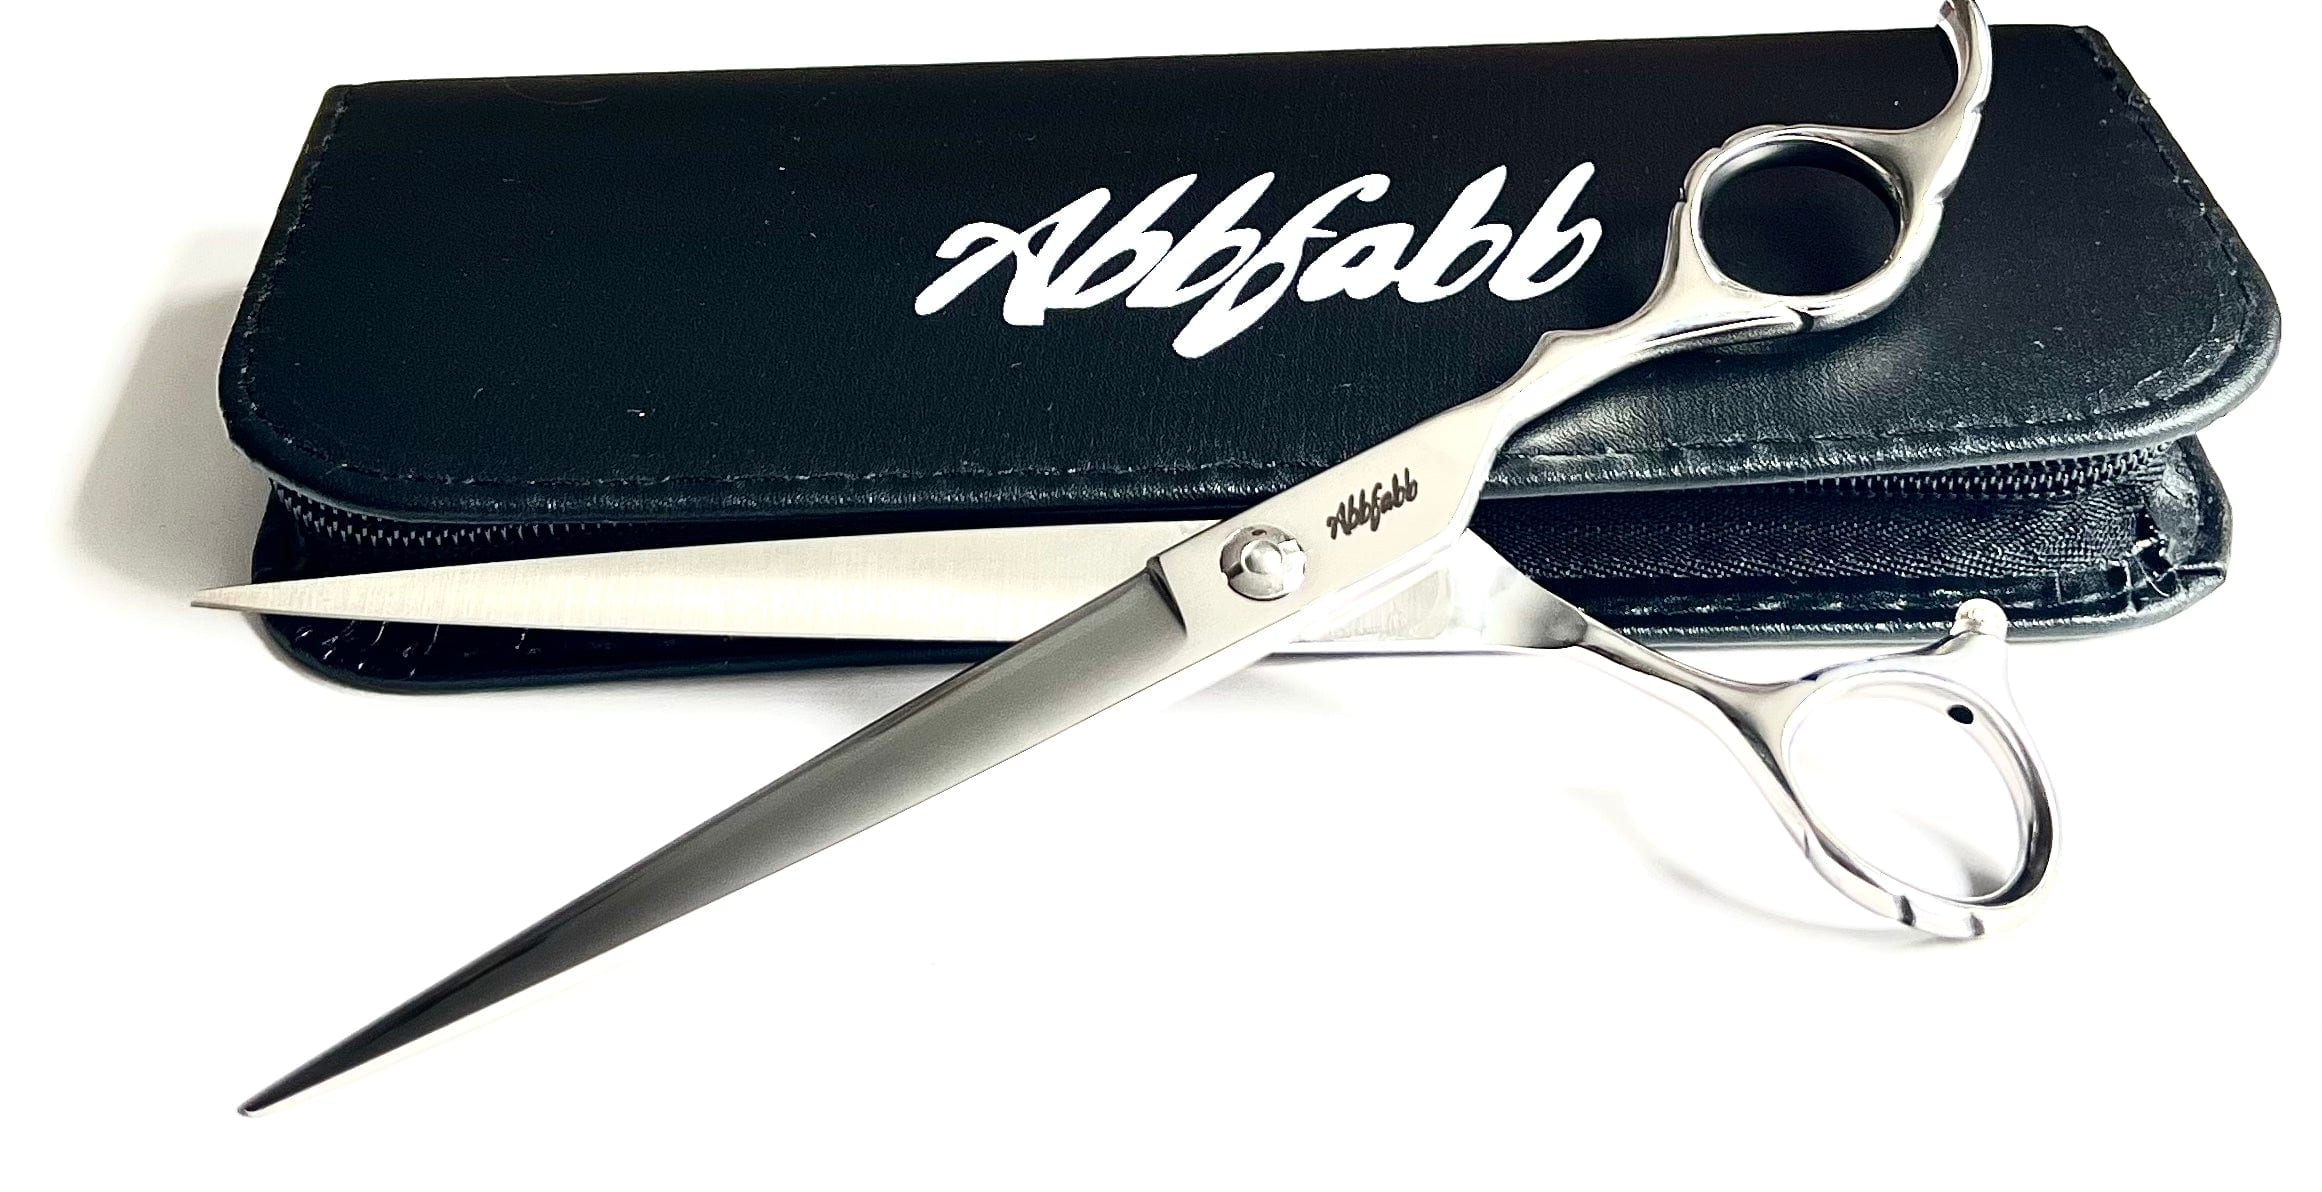 Abbfabb Grooming Scissors Ltd 7.5" Straight Dog Grooming Scissor with Offset Handle